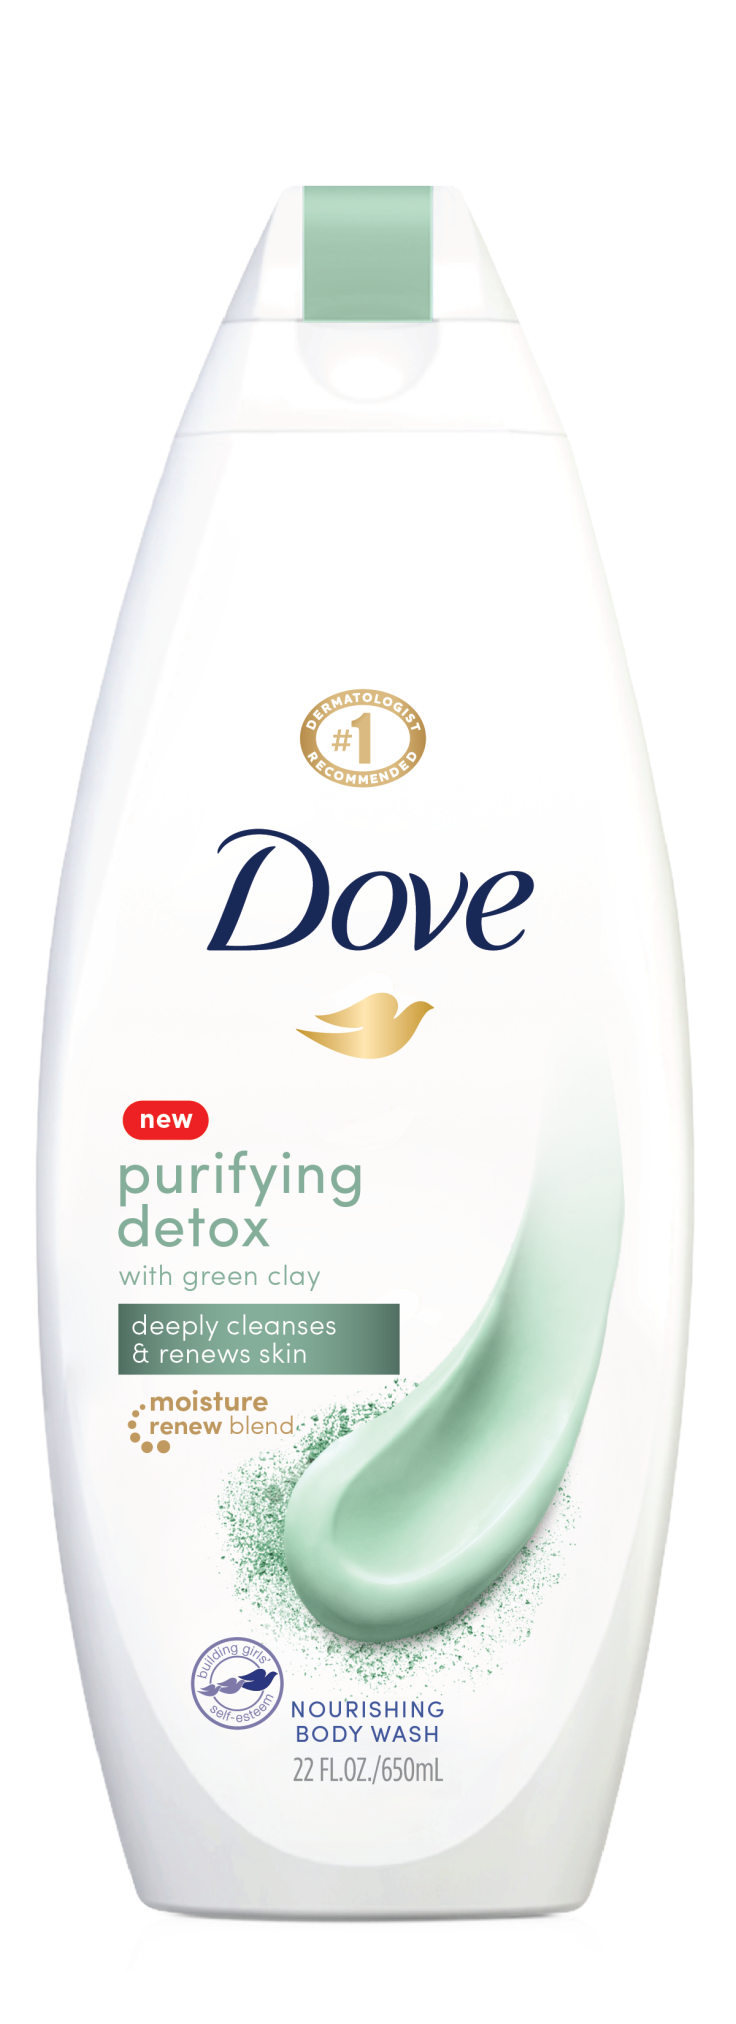 Dove Purifying Detox Body Wash 22oz